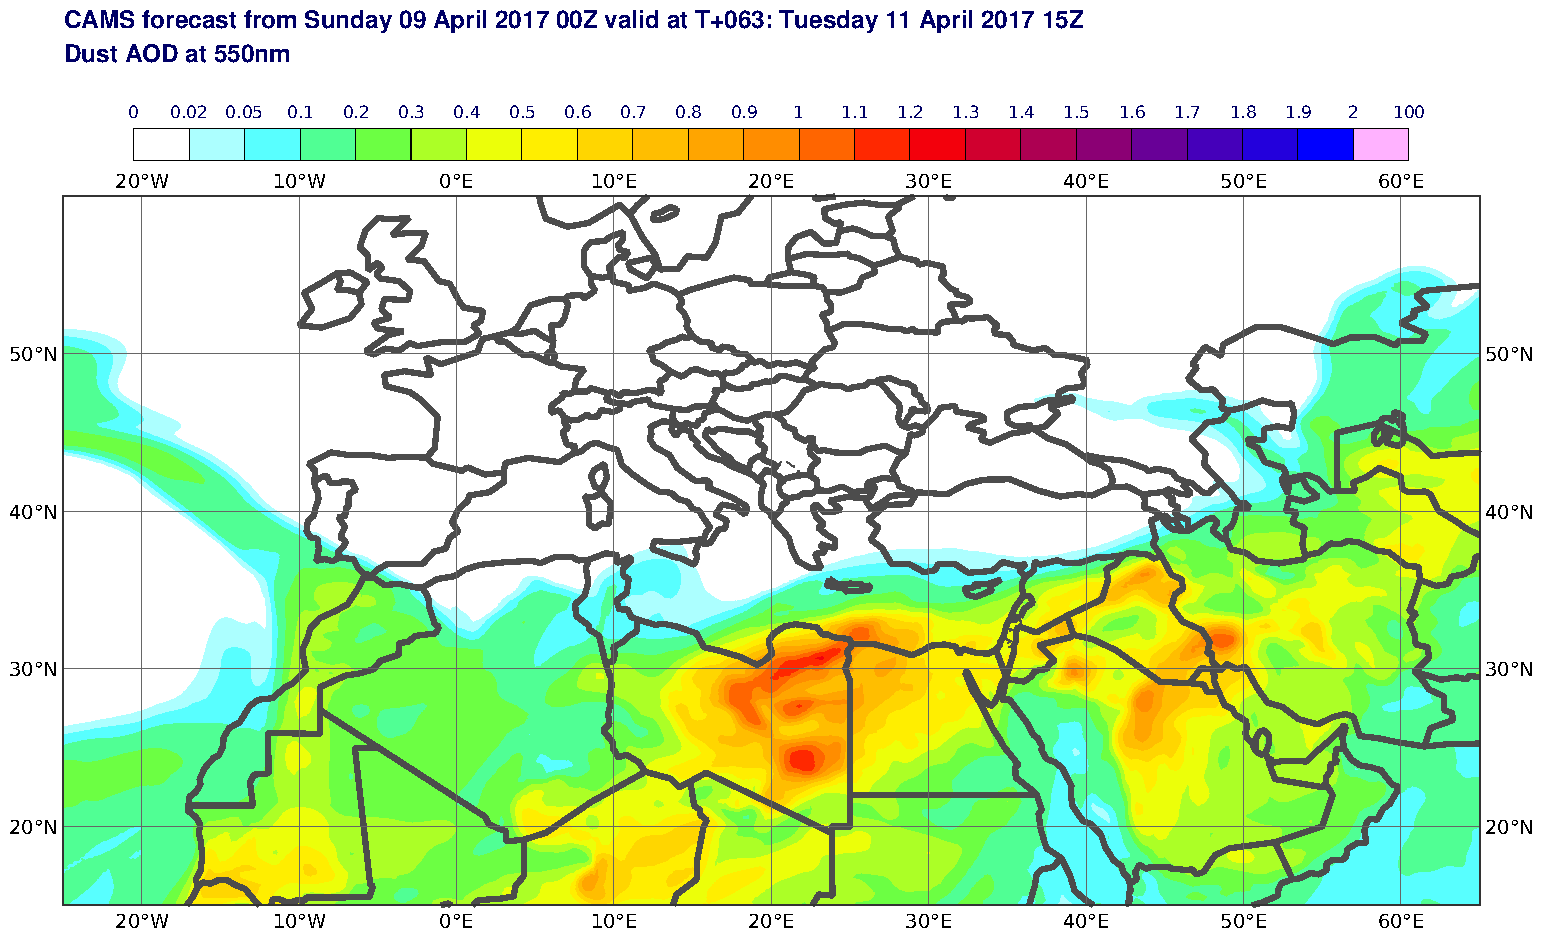 Dust AOD at 550nm valid at T63 - 2017-04-11 15:00